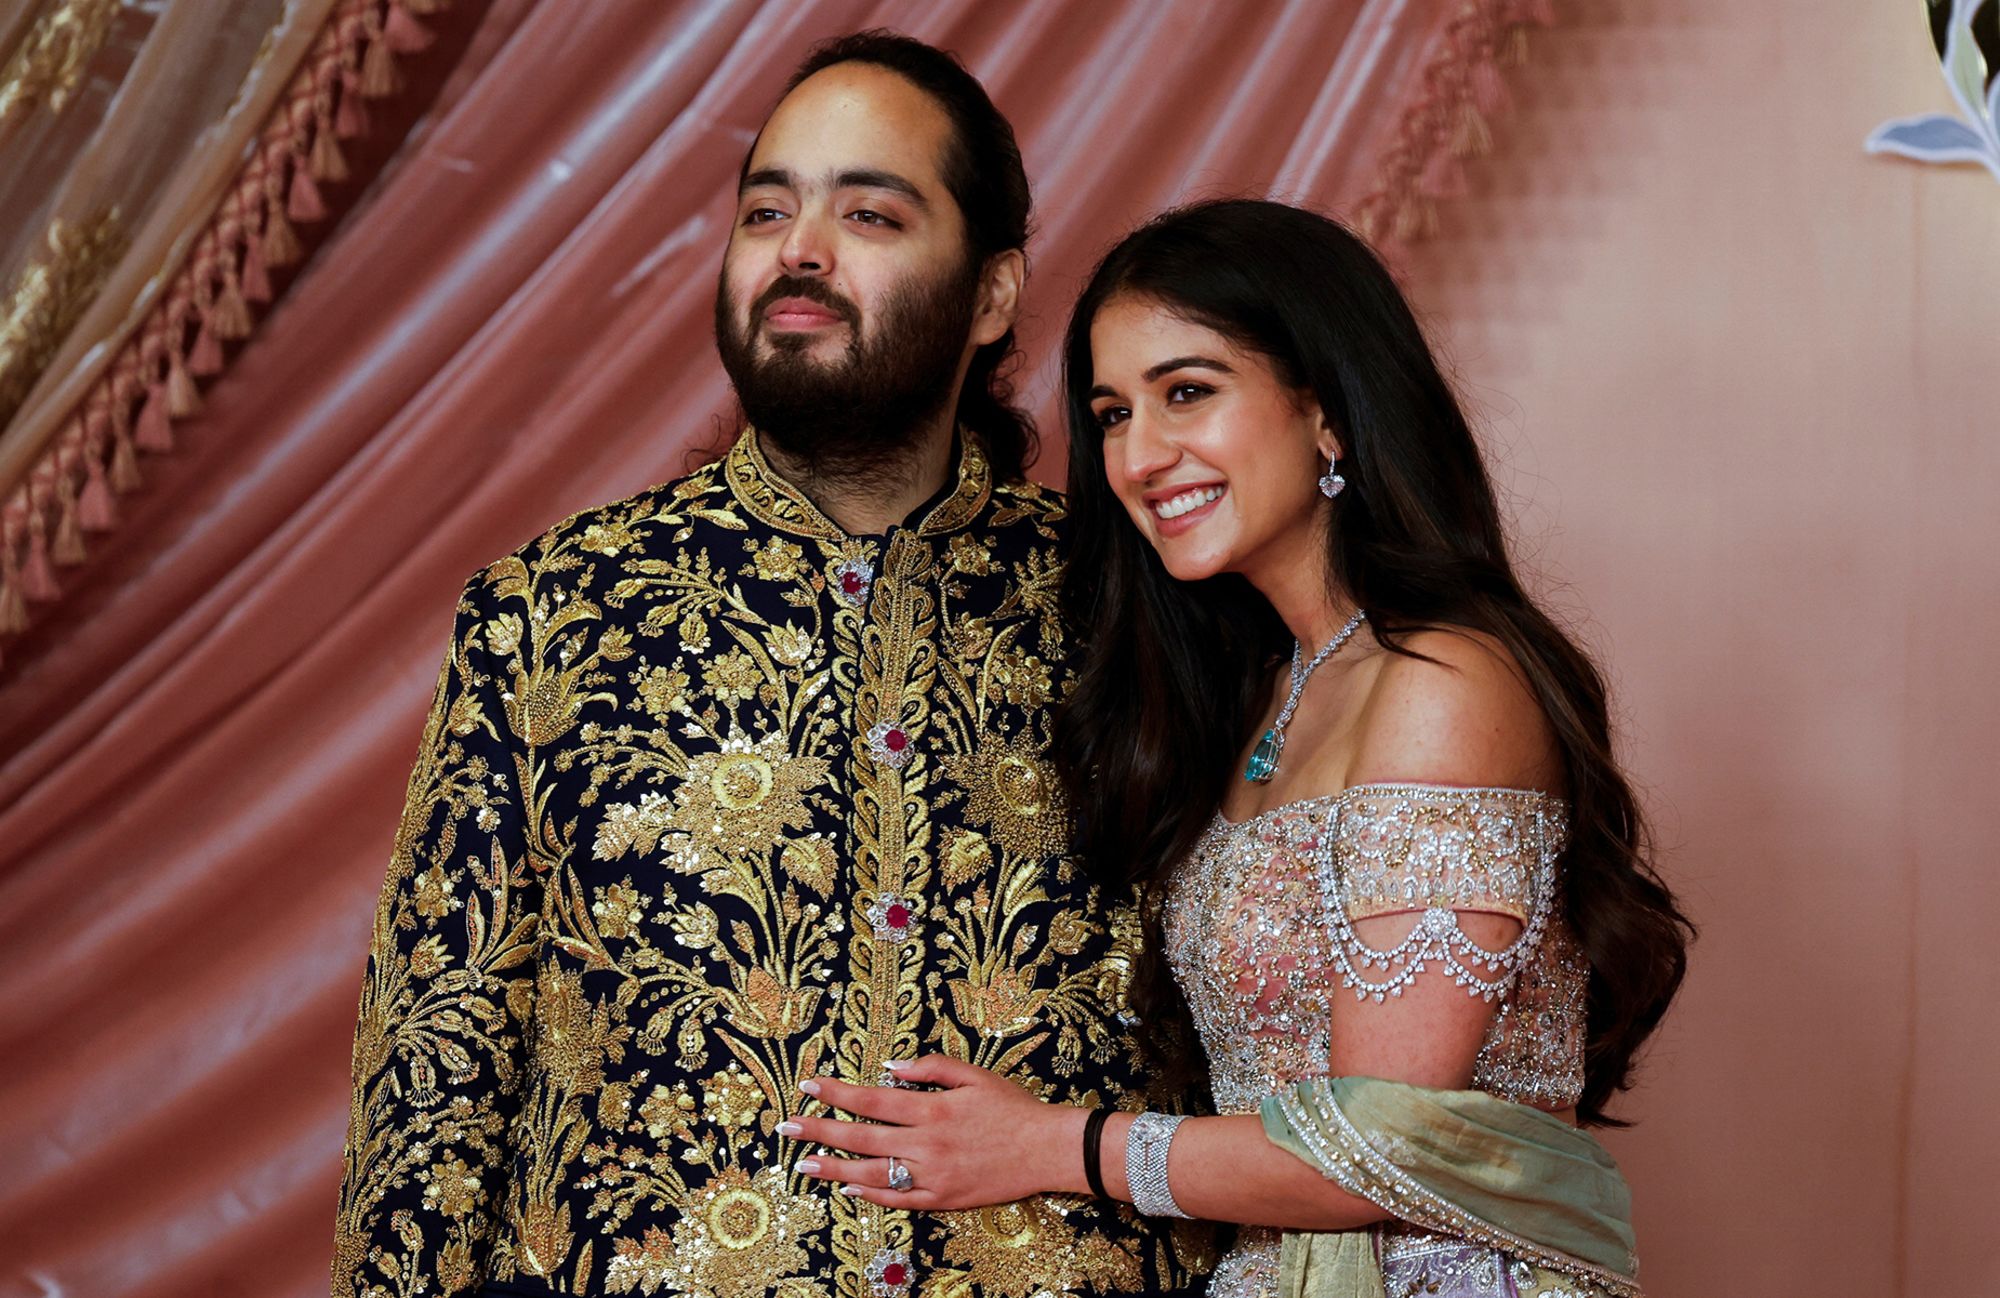 Anant Ambani, son of businessman Mukesh Ambani, poses with his fiancee Radhika Merchant during their sangeet ceremony in Mumbai, India, on Friday.